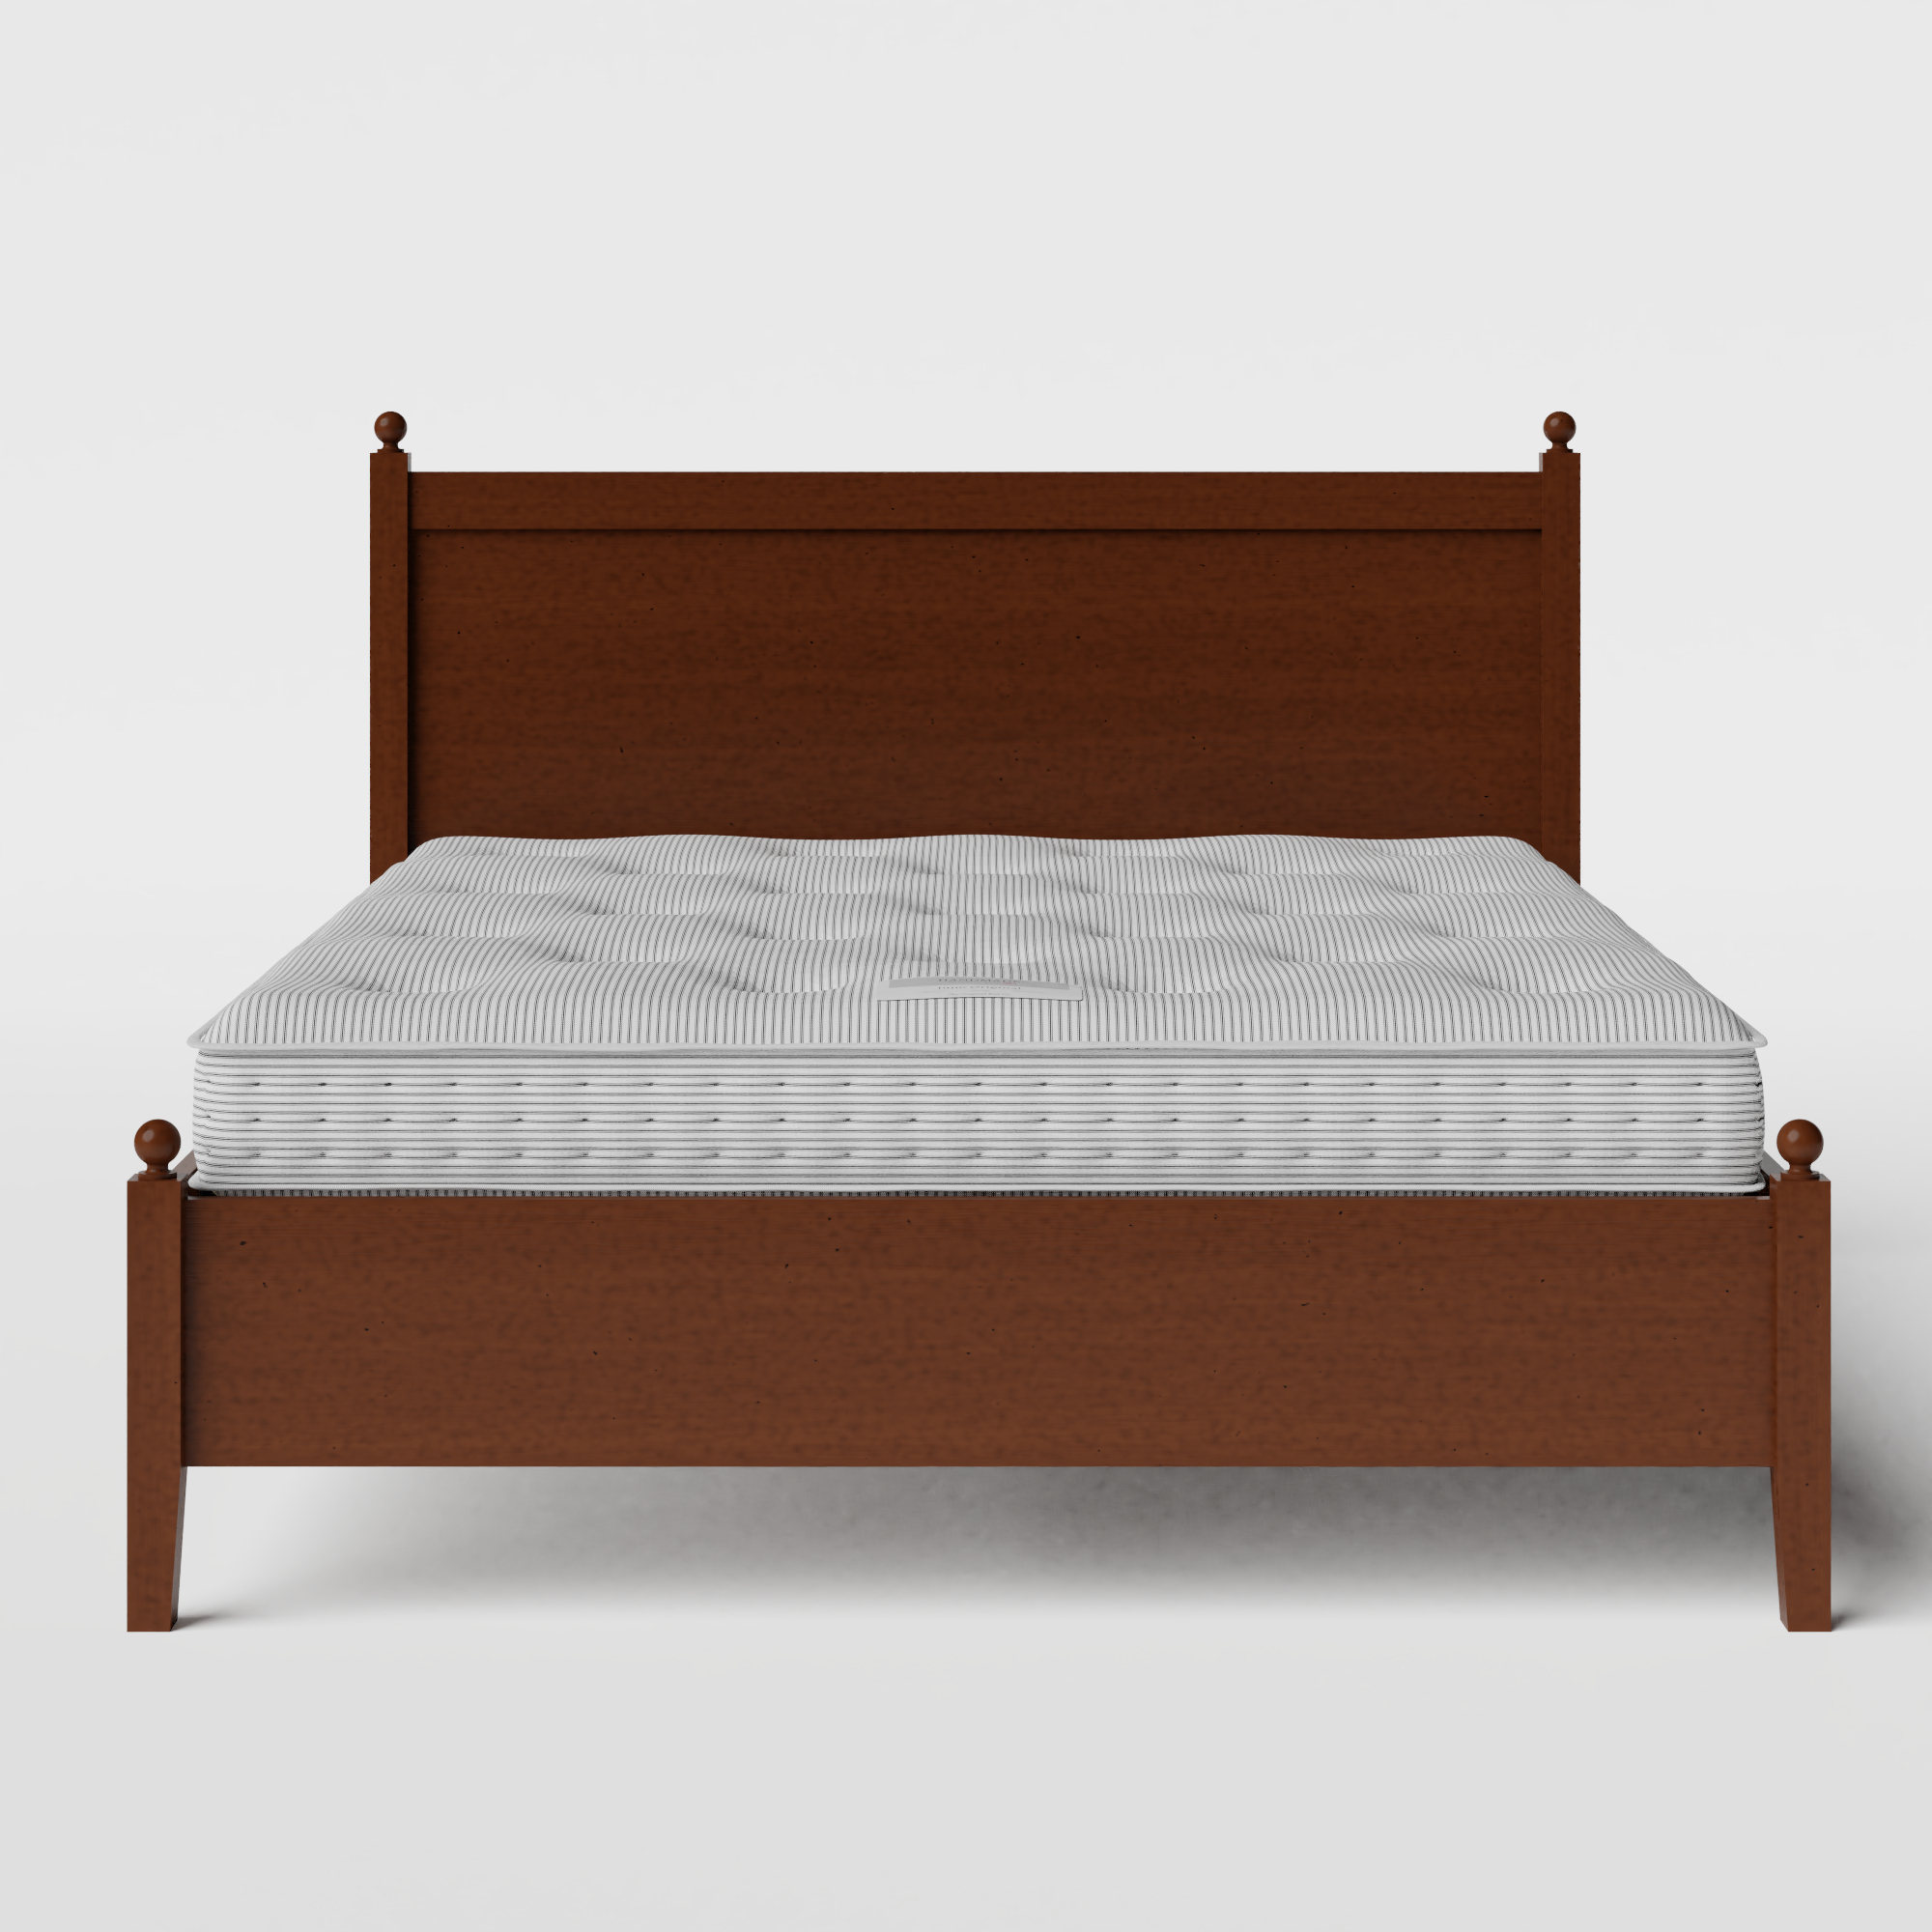 Marbella Low Footend wood bed in dark cherry with Juno mattress